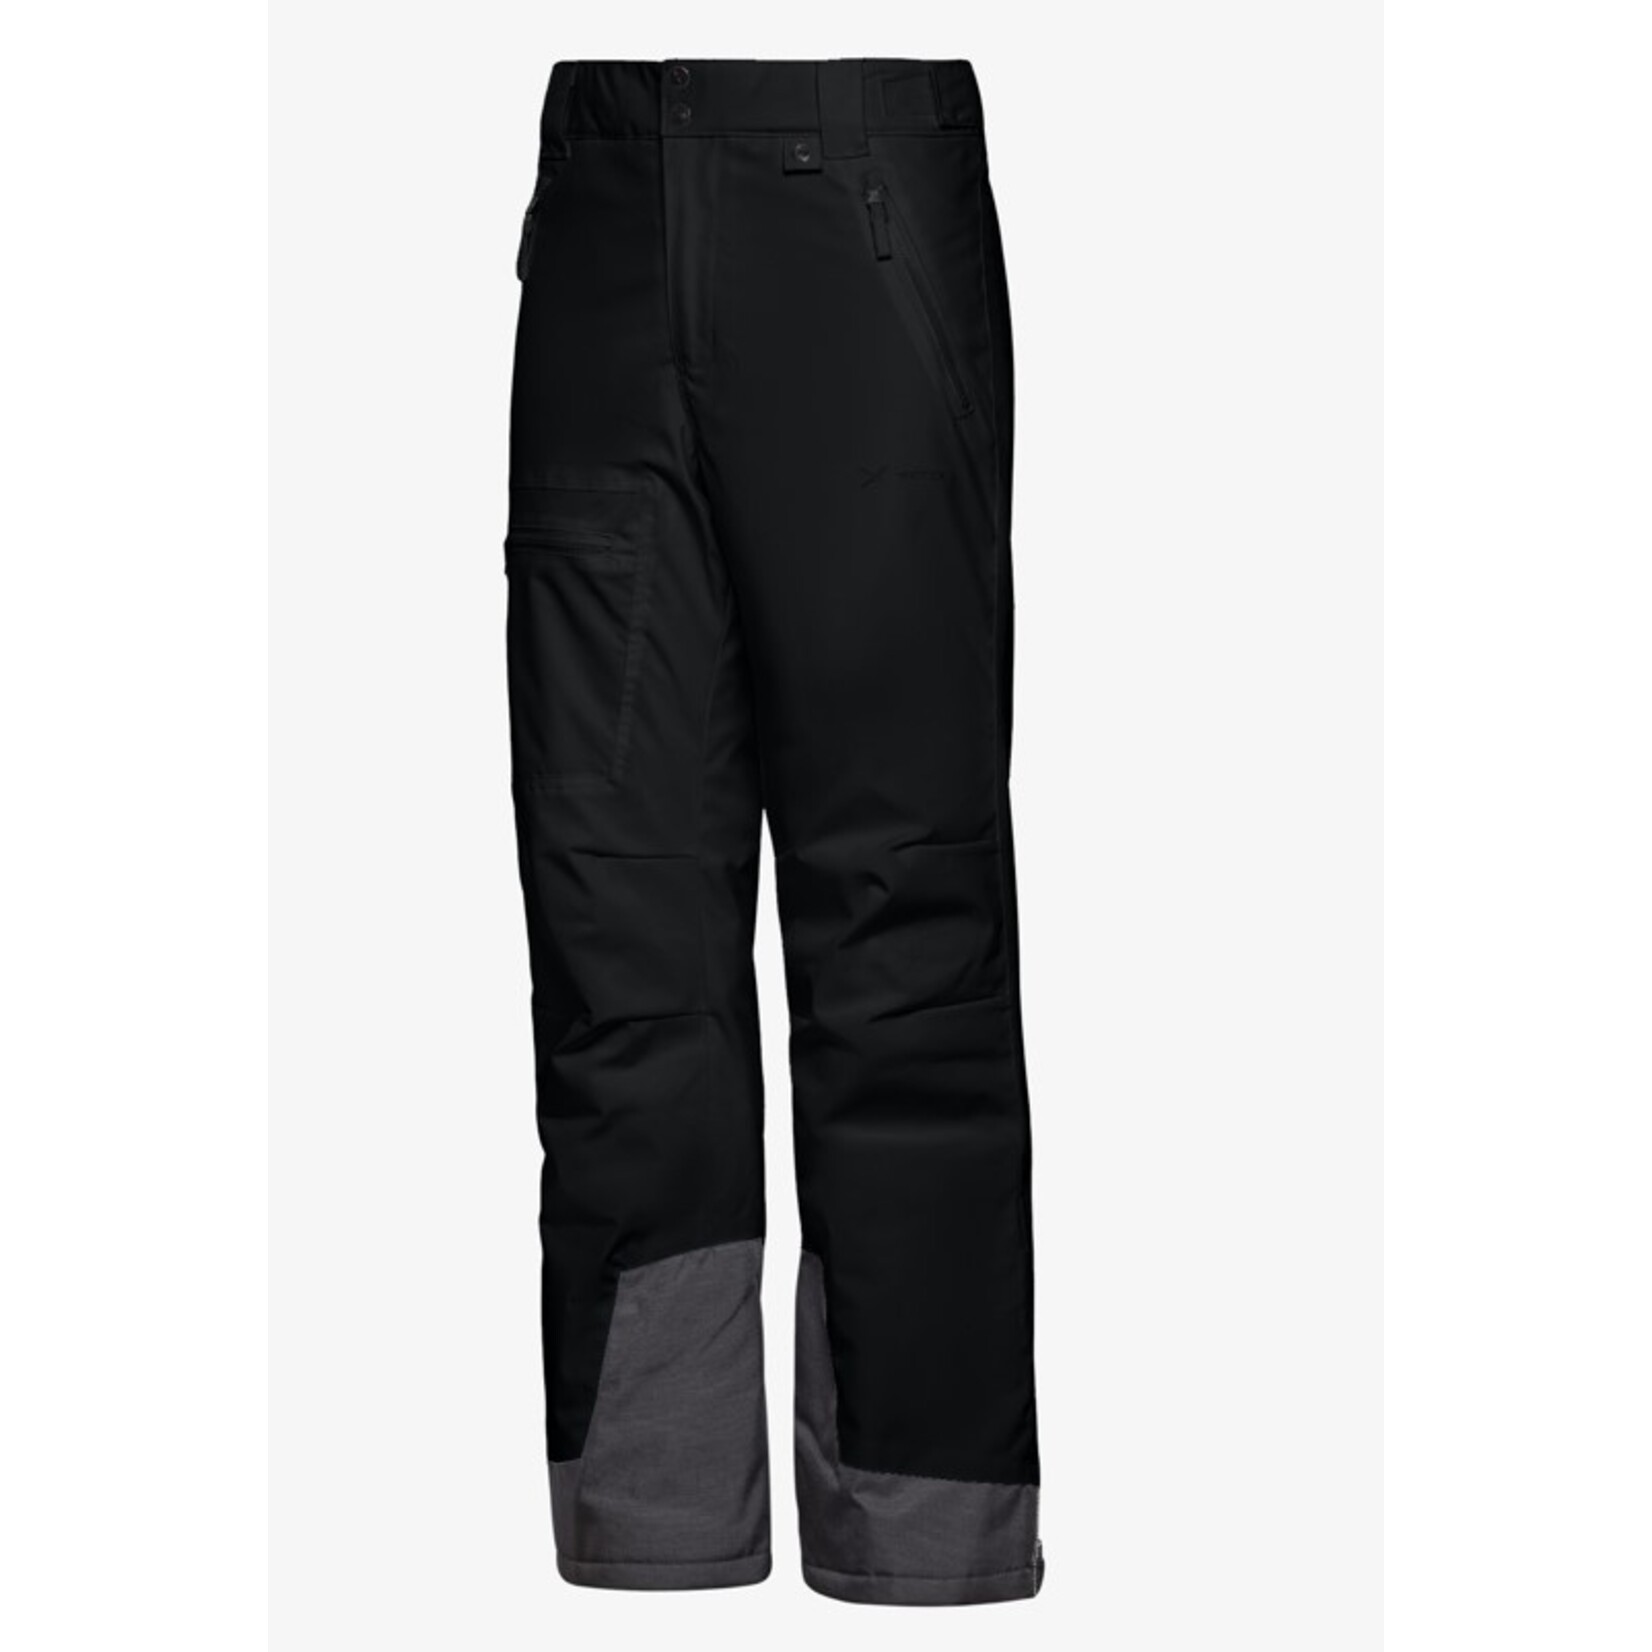 ARCTIX Mens Insulated Ski Pant - 23/24